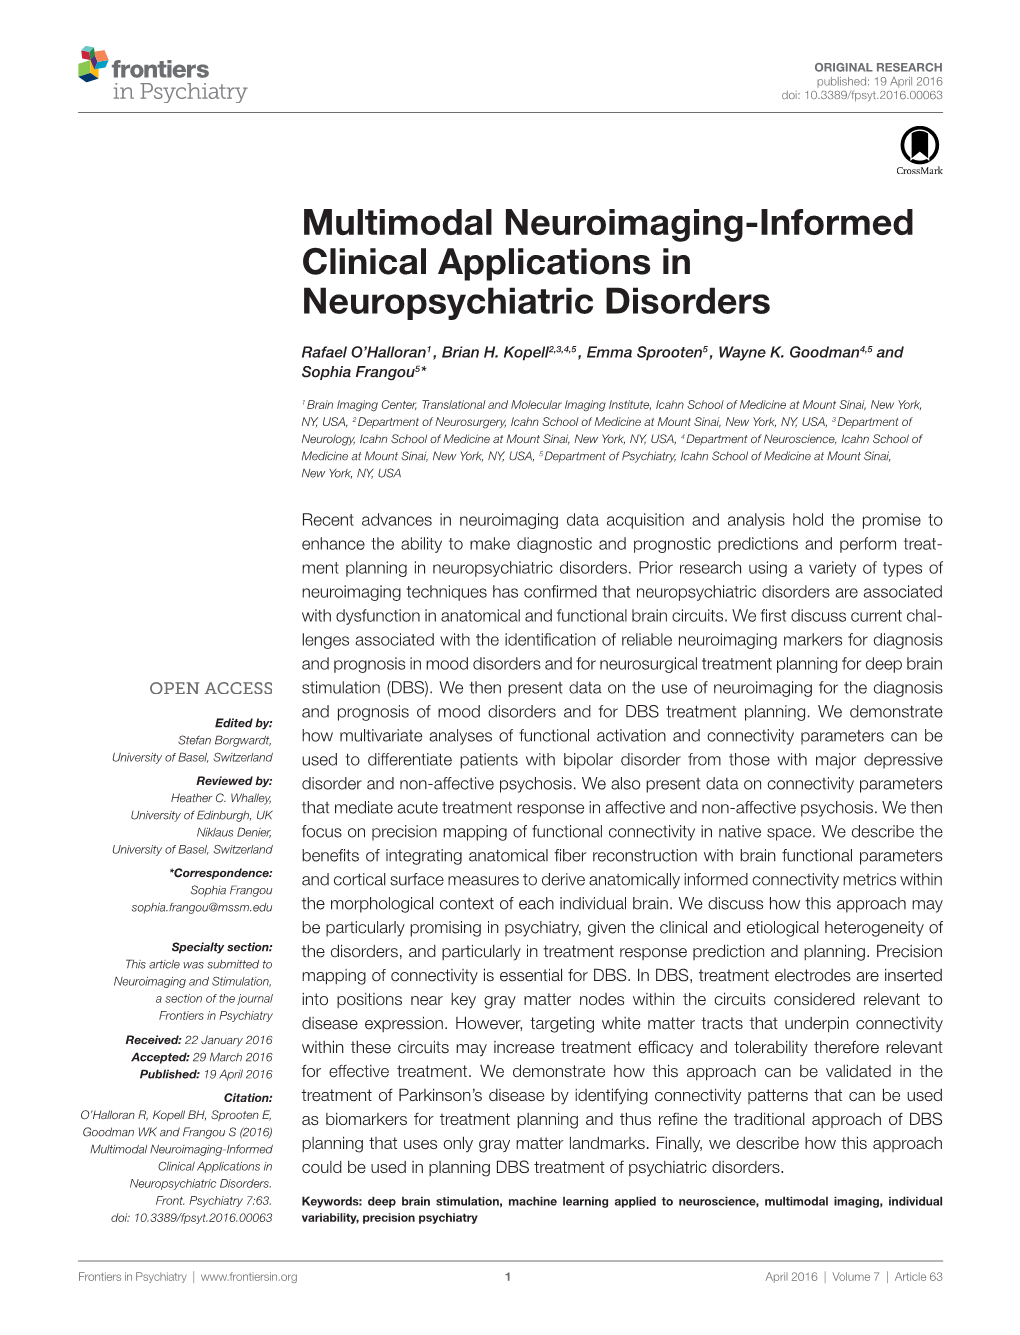 Multimodal Neuroimaging-Informed Clinical Applications in Neuropsychiatric Disorders